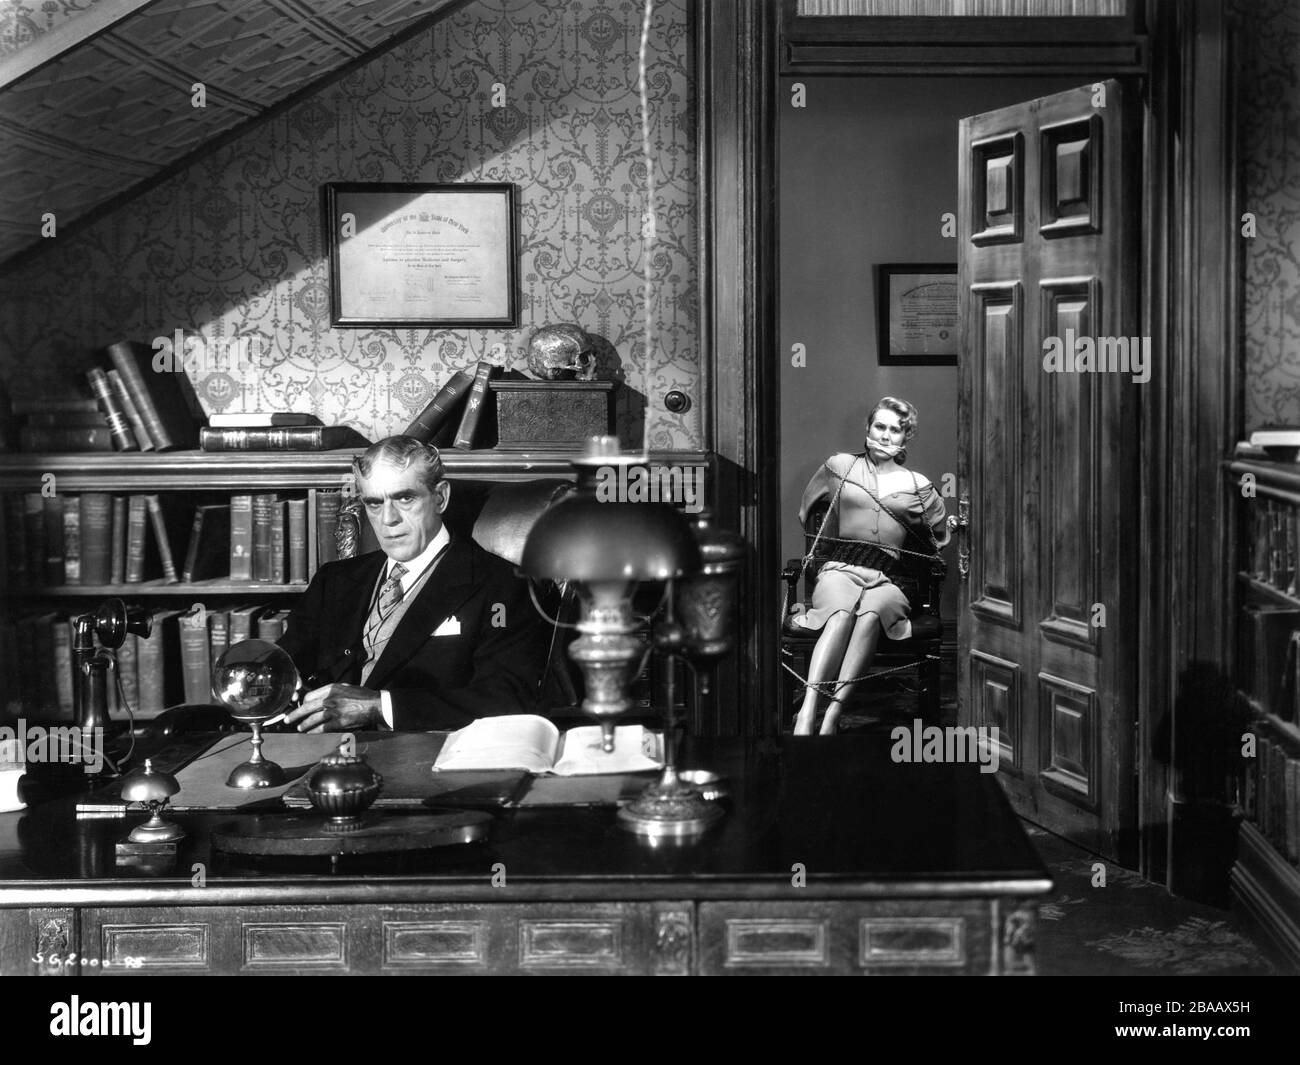 BORIS KARLOFF and VIRGINIA MAYO in THE SECRET LIFE OF WALTER MITTY 1947 director NORMAN Z. McLEOD The Samuel Goldwyn Company / RKO Radio Pictures Stock Photo